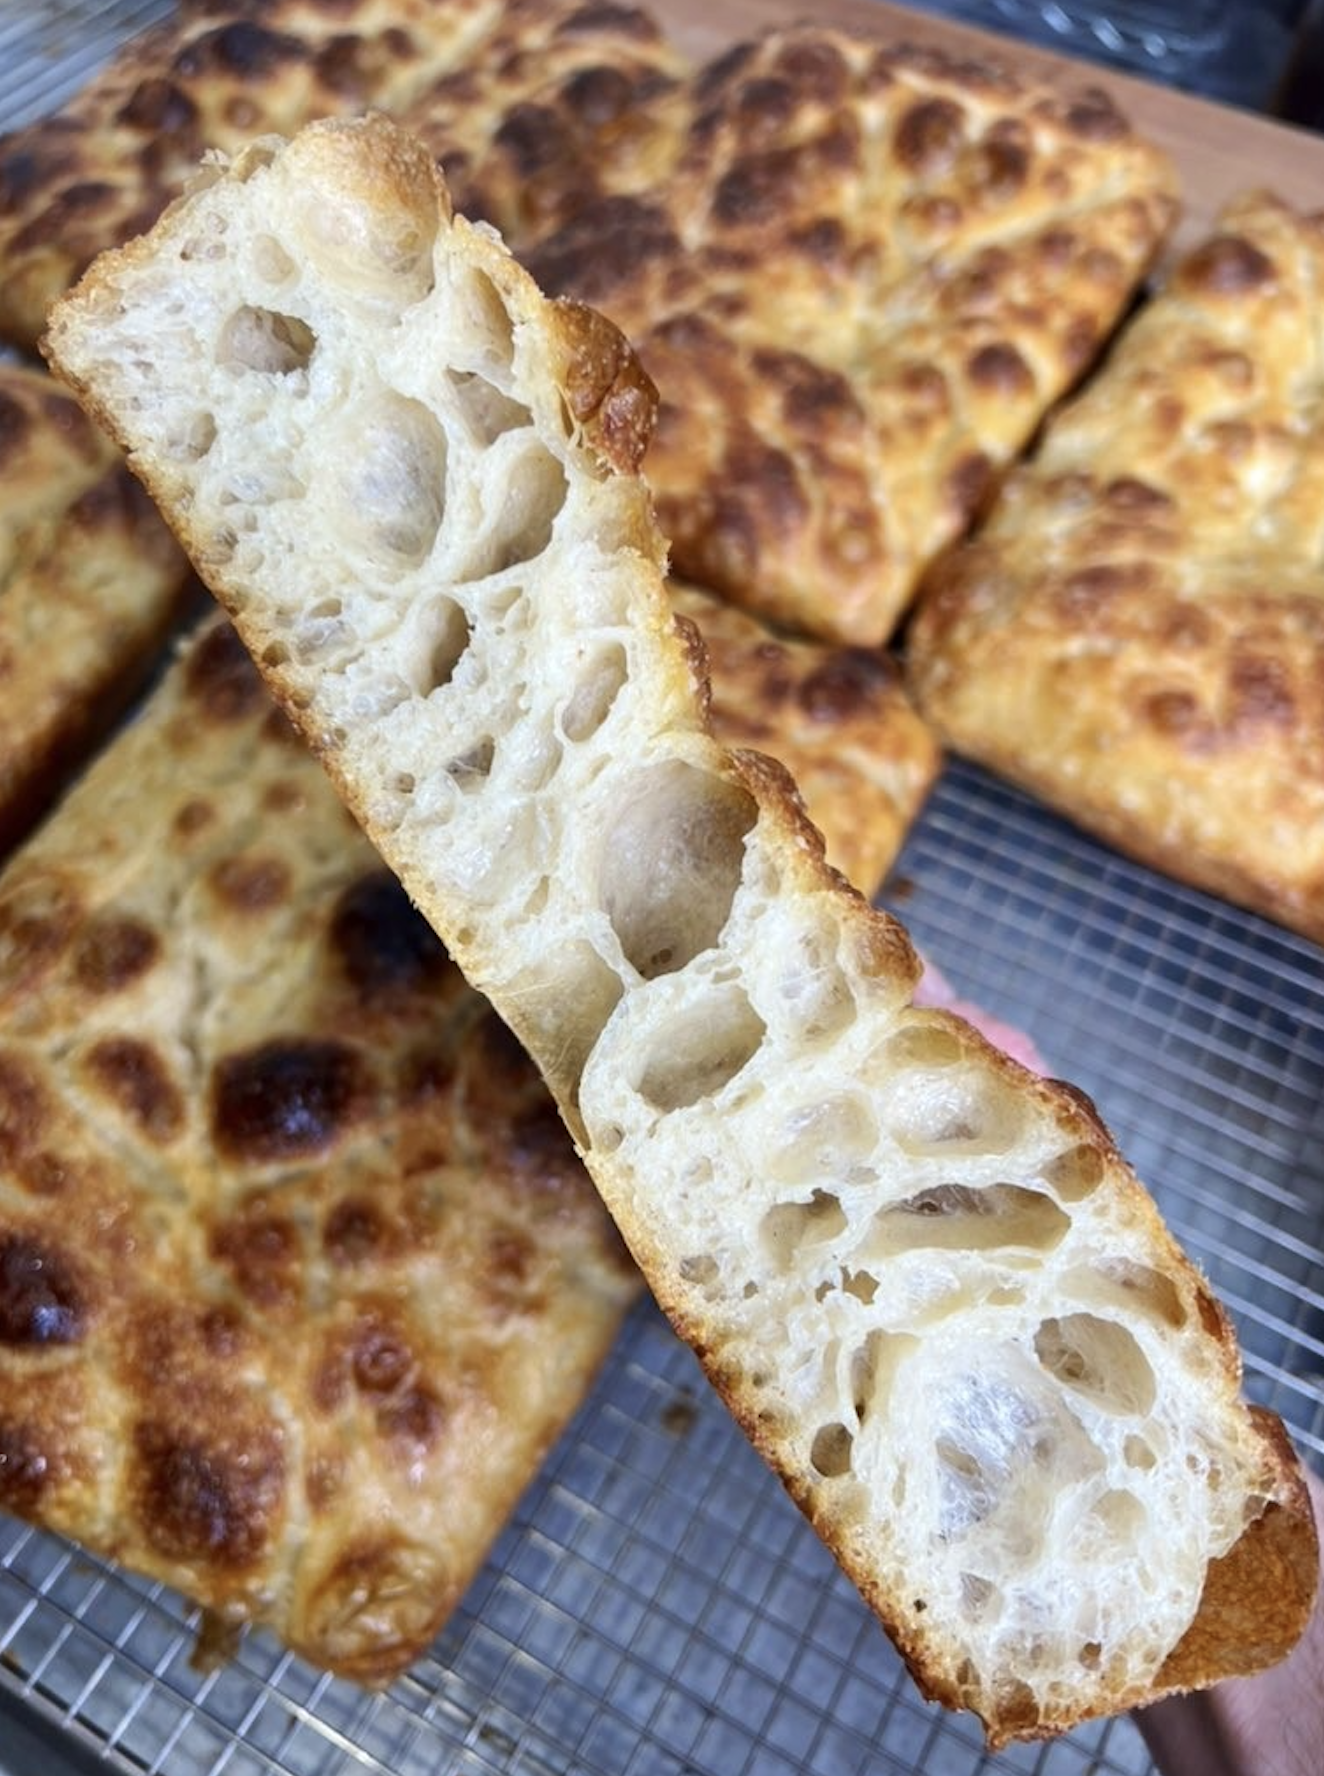 sourdough bread social media instagram influencer content creator recipe developer teacher matthew james duffy in canada 5